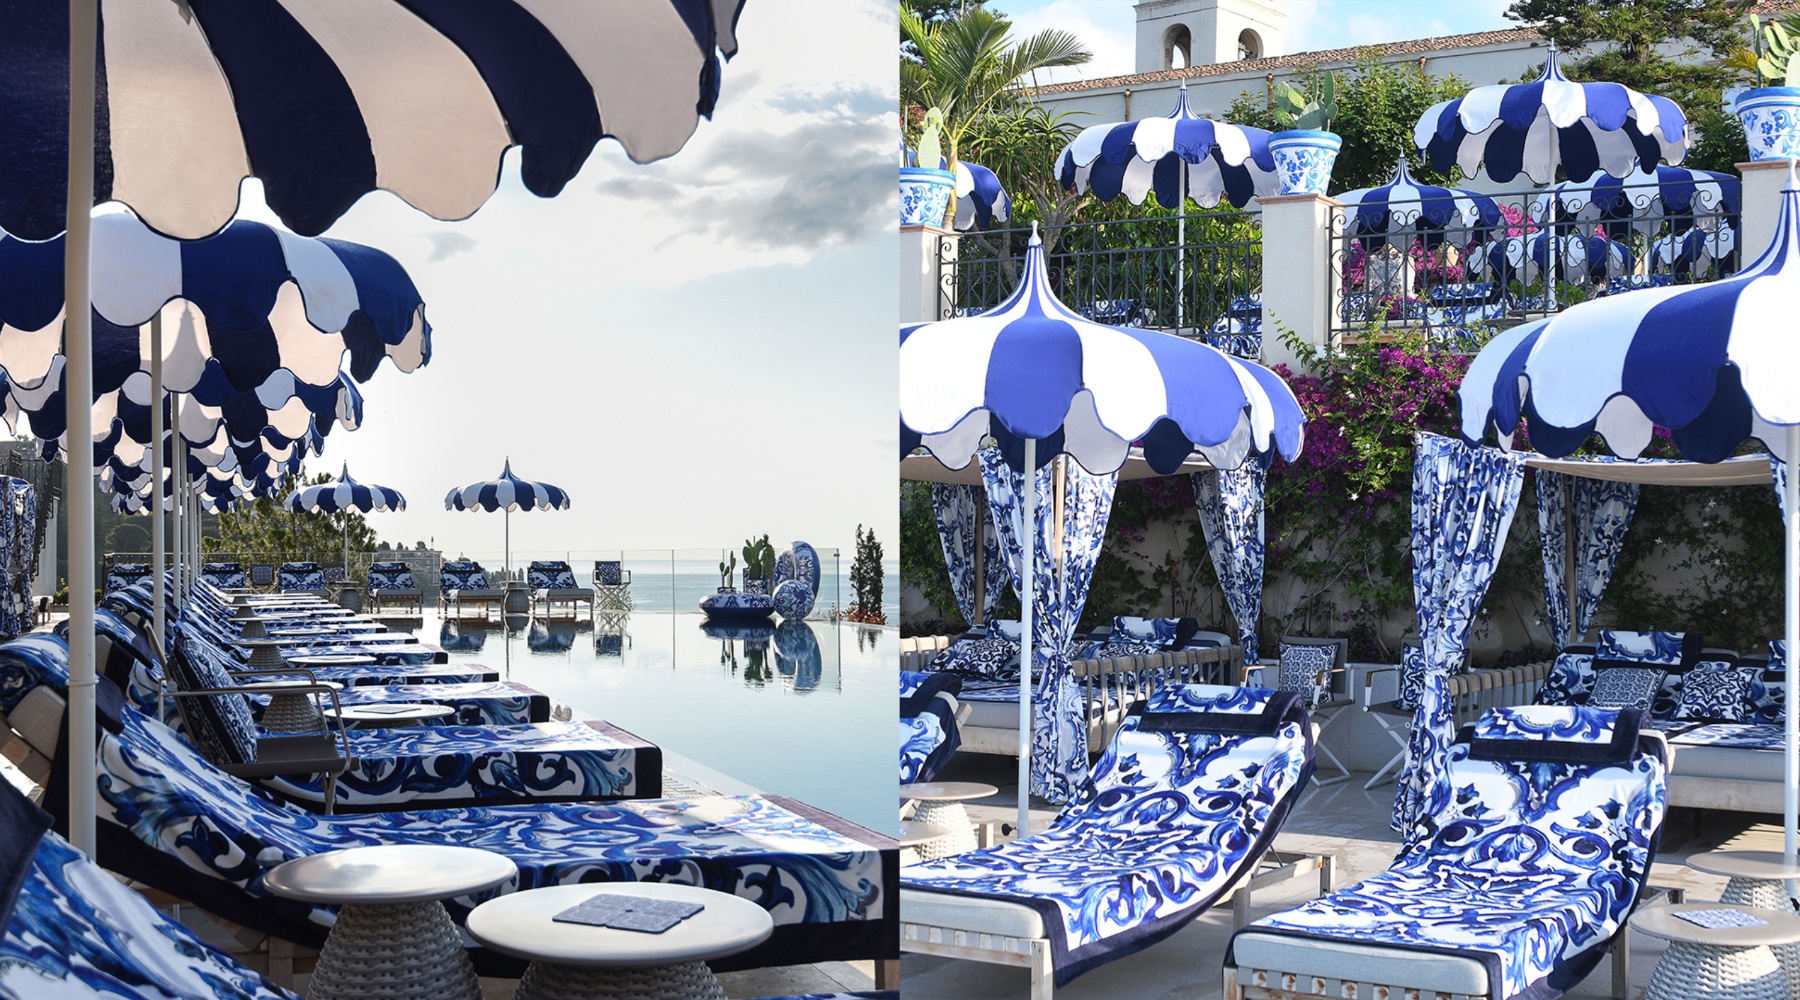 Bazen na kojem želimo biti: Hotel Four Seasons na Siciliji u novom Dolce&Gabbana ruhu